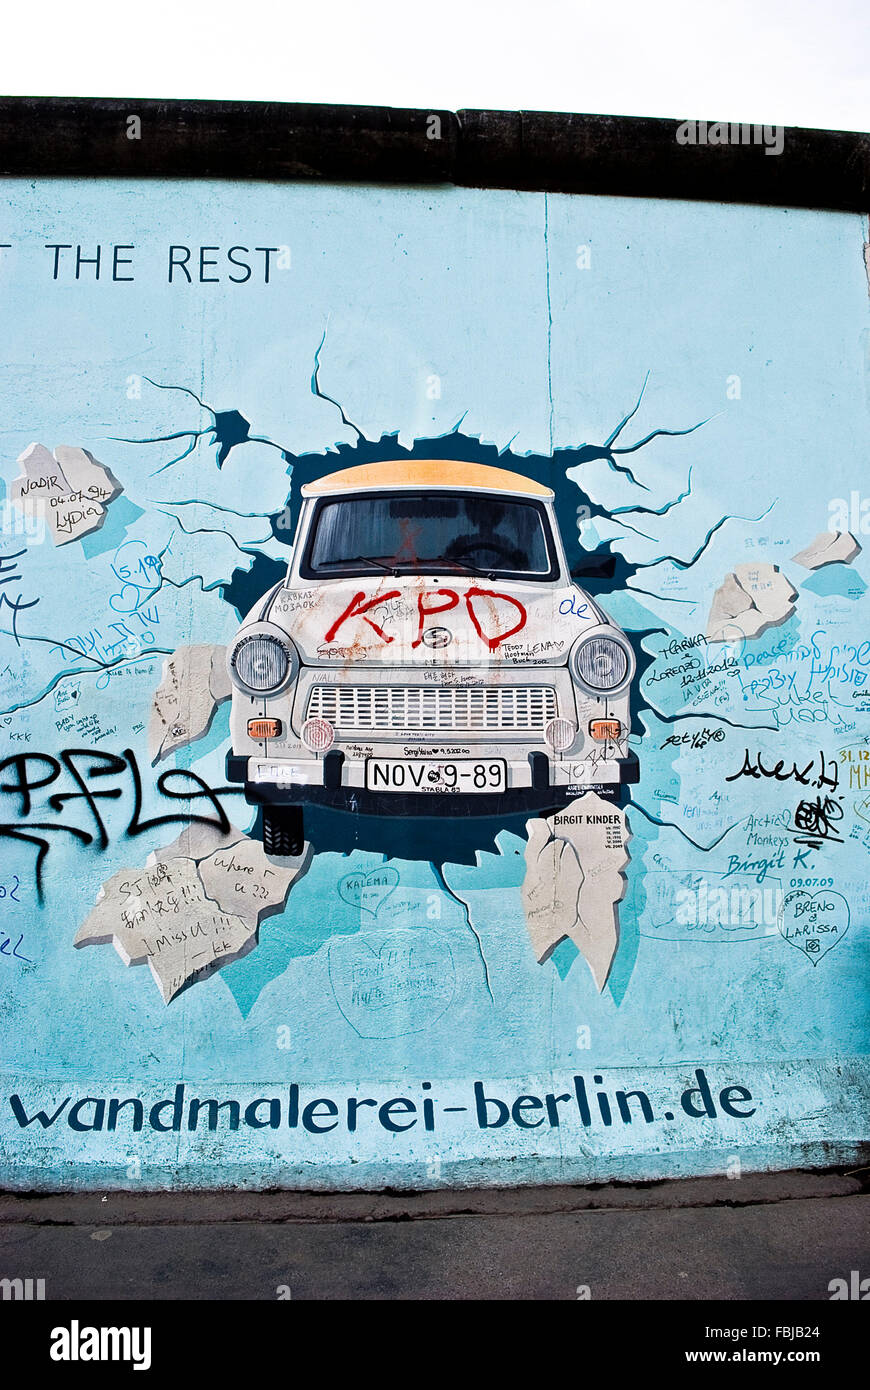 Le meilleur Test (test le reste)' artiste : Birgit Kinder, East Side Gallery, Berlin Banque D'Images